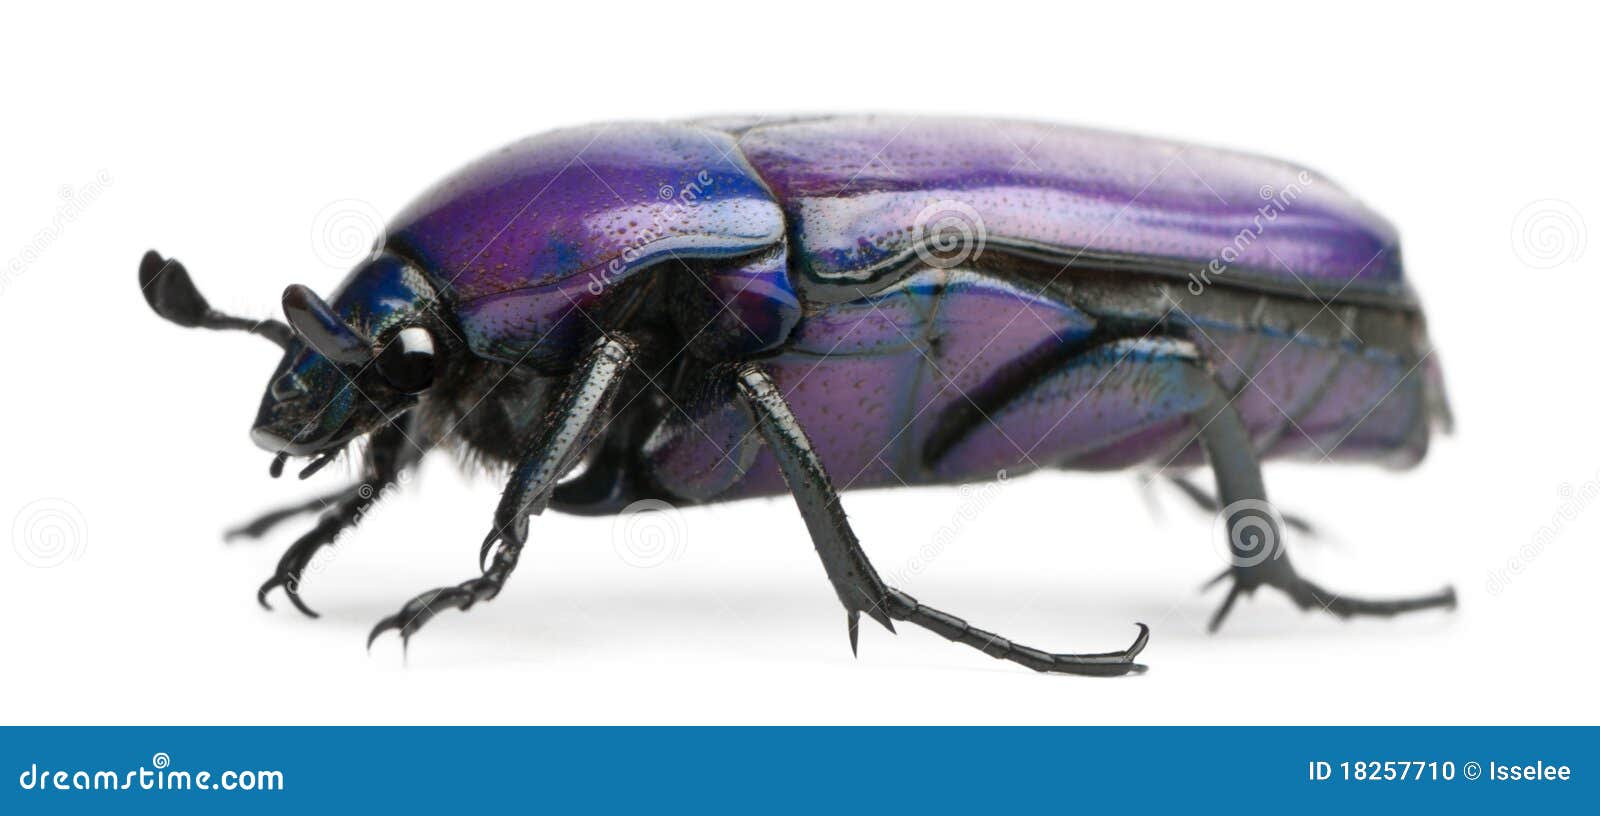 beetle, chlorocala africana oertzeni